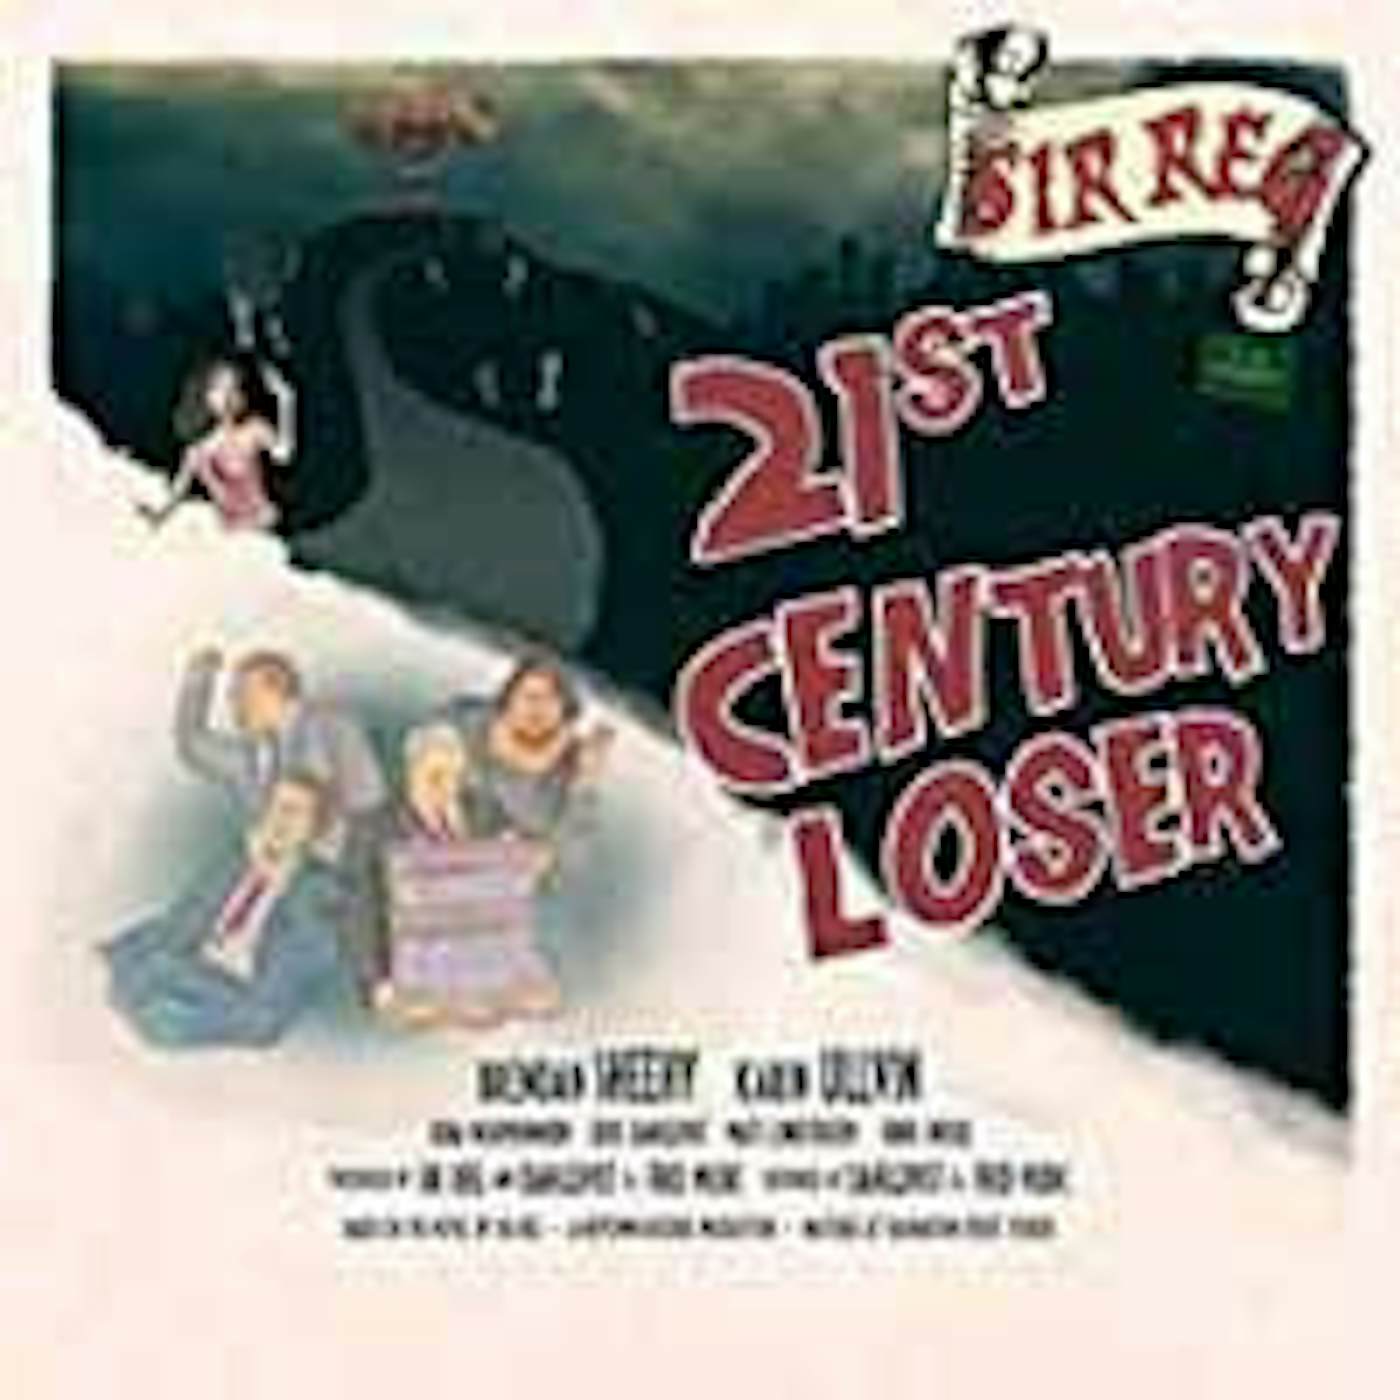 Sir Reg LP - 21St Century Loser (Vinyl)